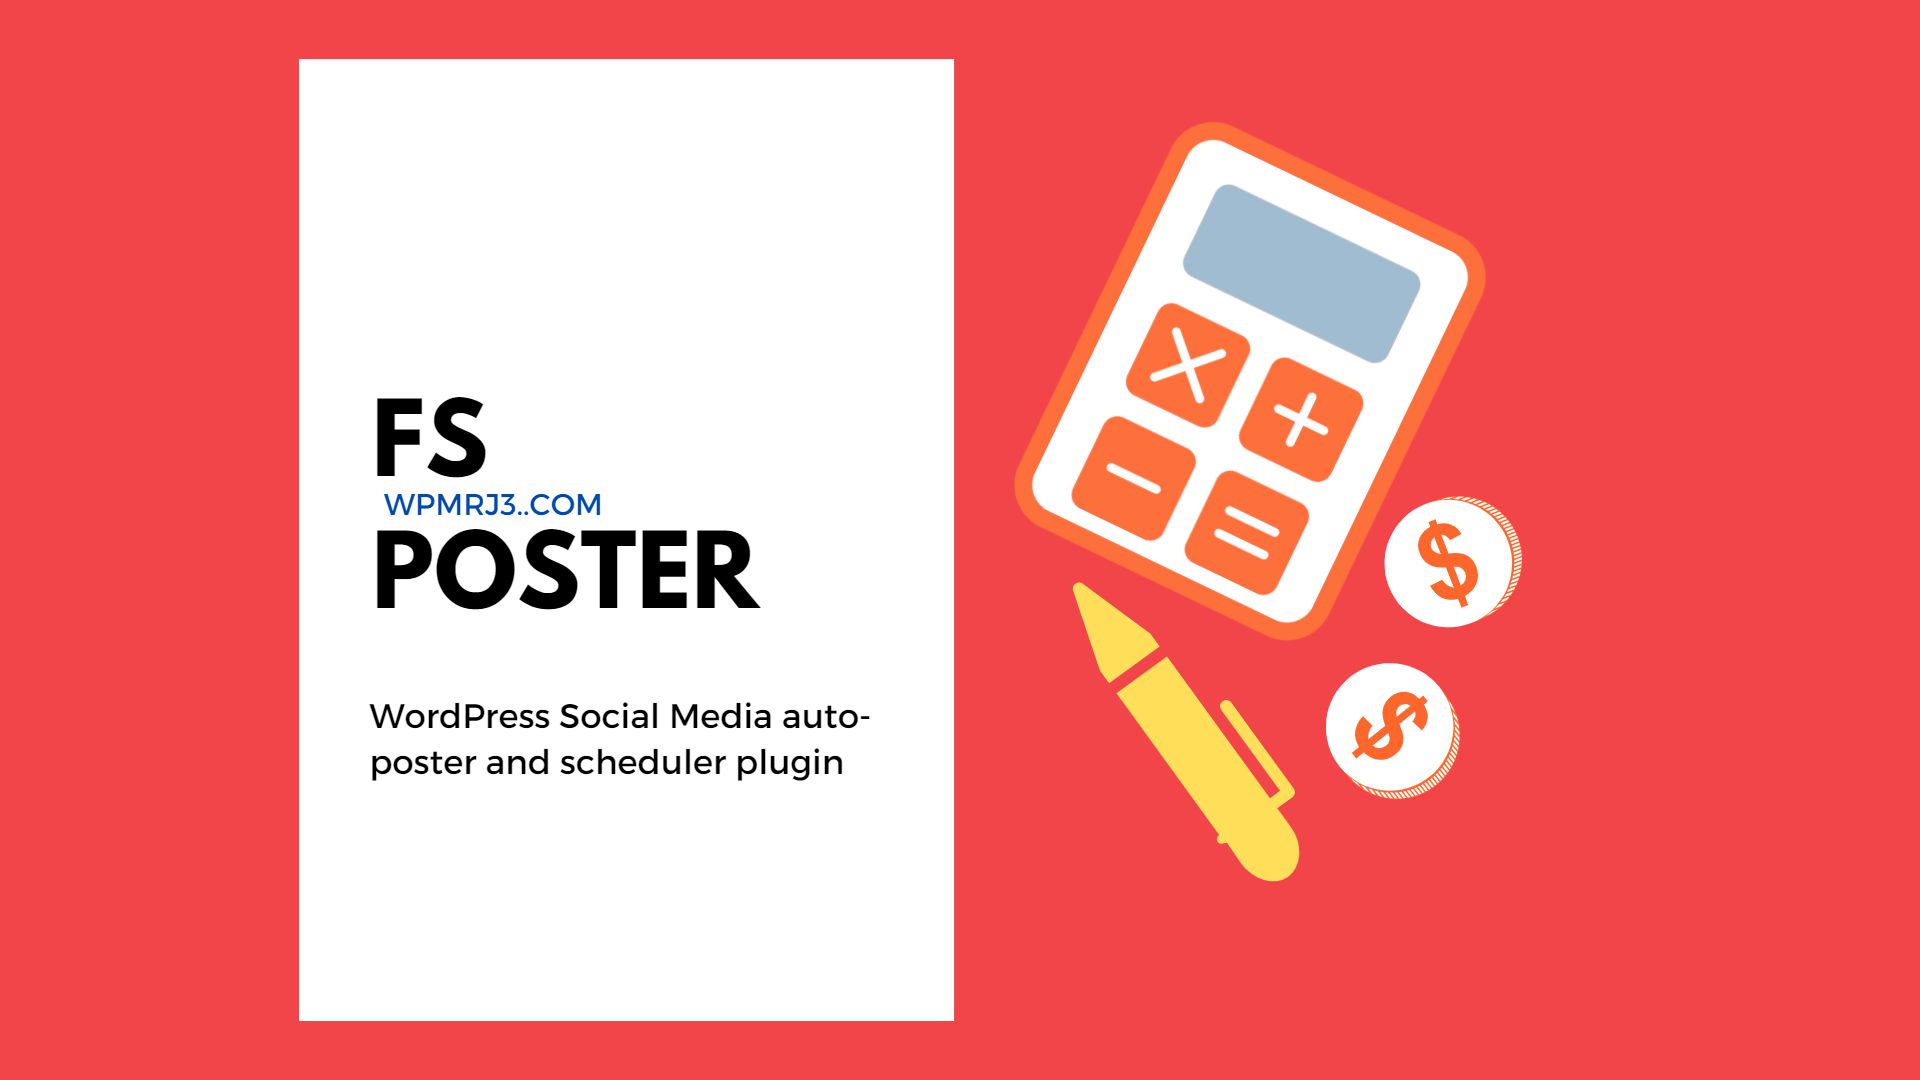 Fs Poster Plugin: WordPress Social Media auto-poster and scheduler plugin